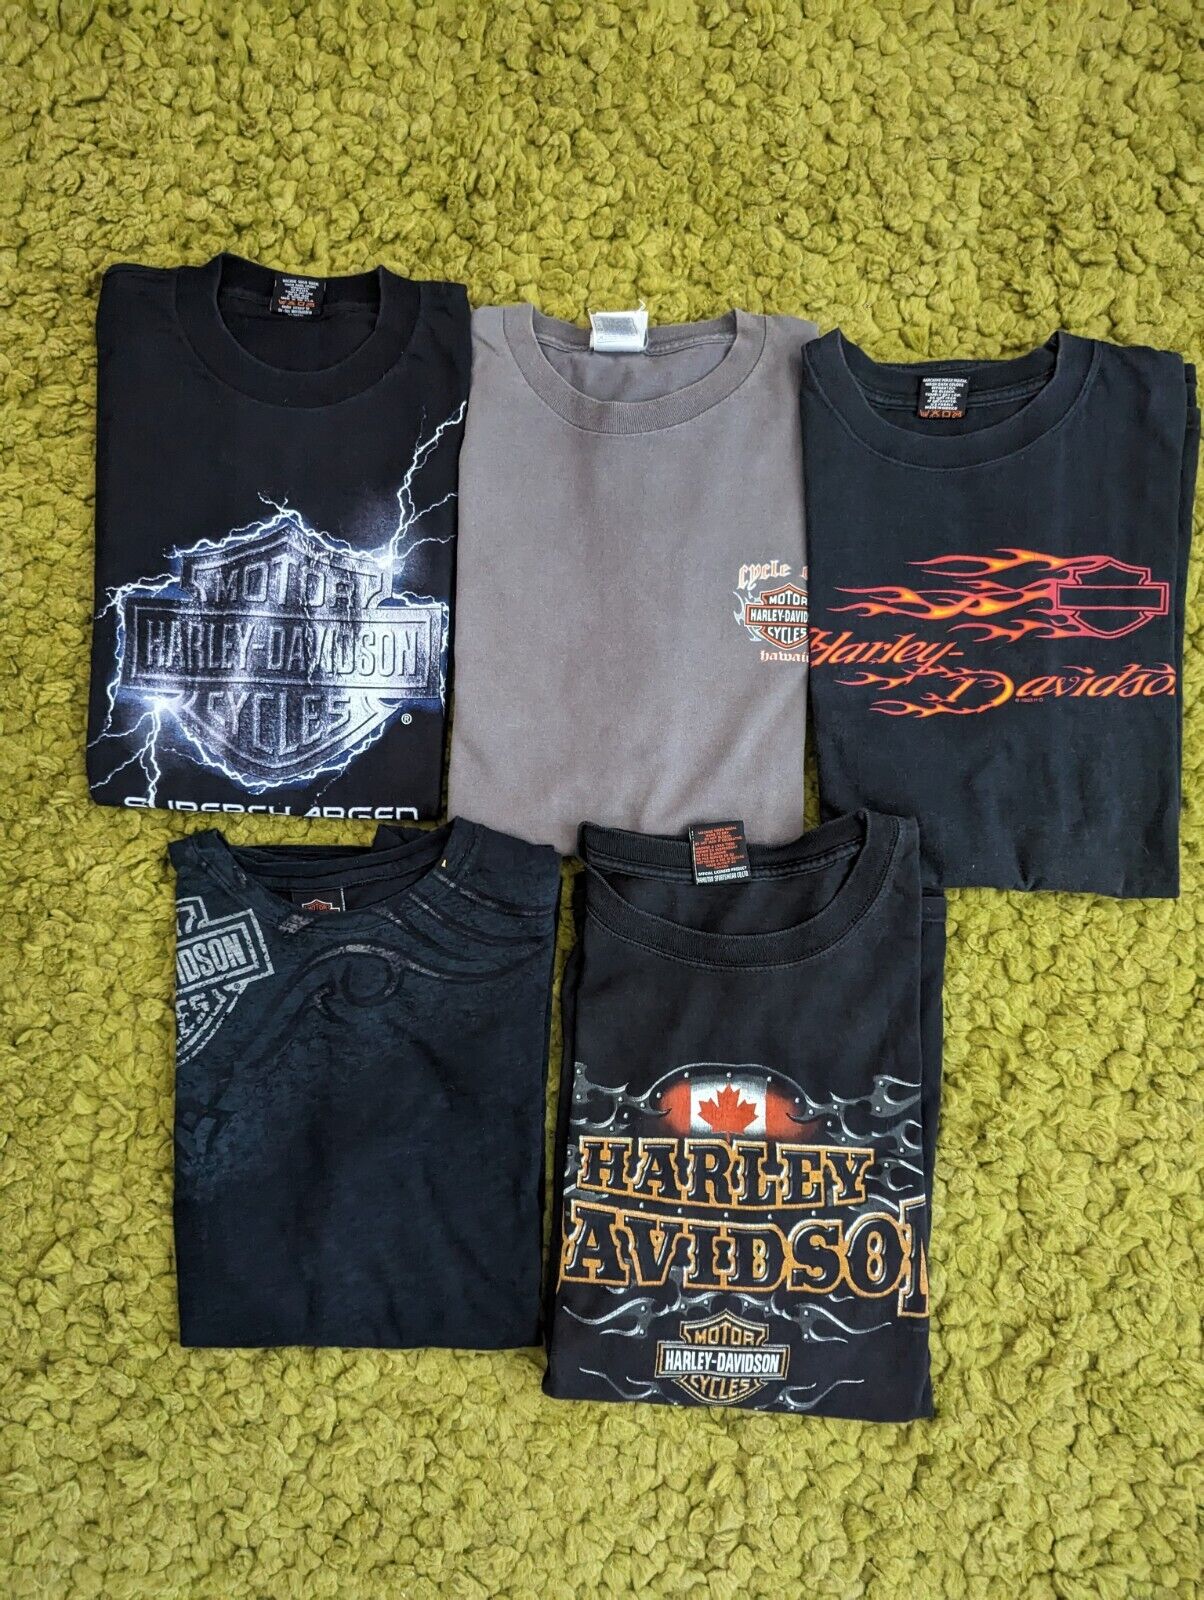 Harley Davidson Men's T-shirts Lot Of 5 Size XL